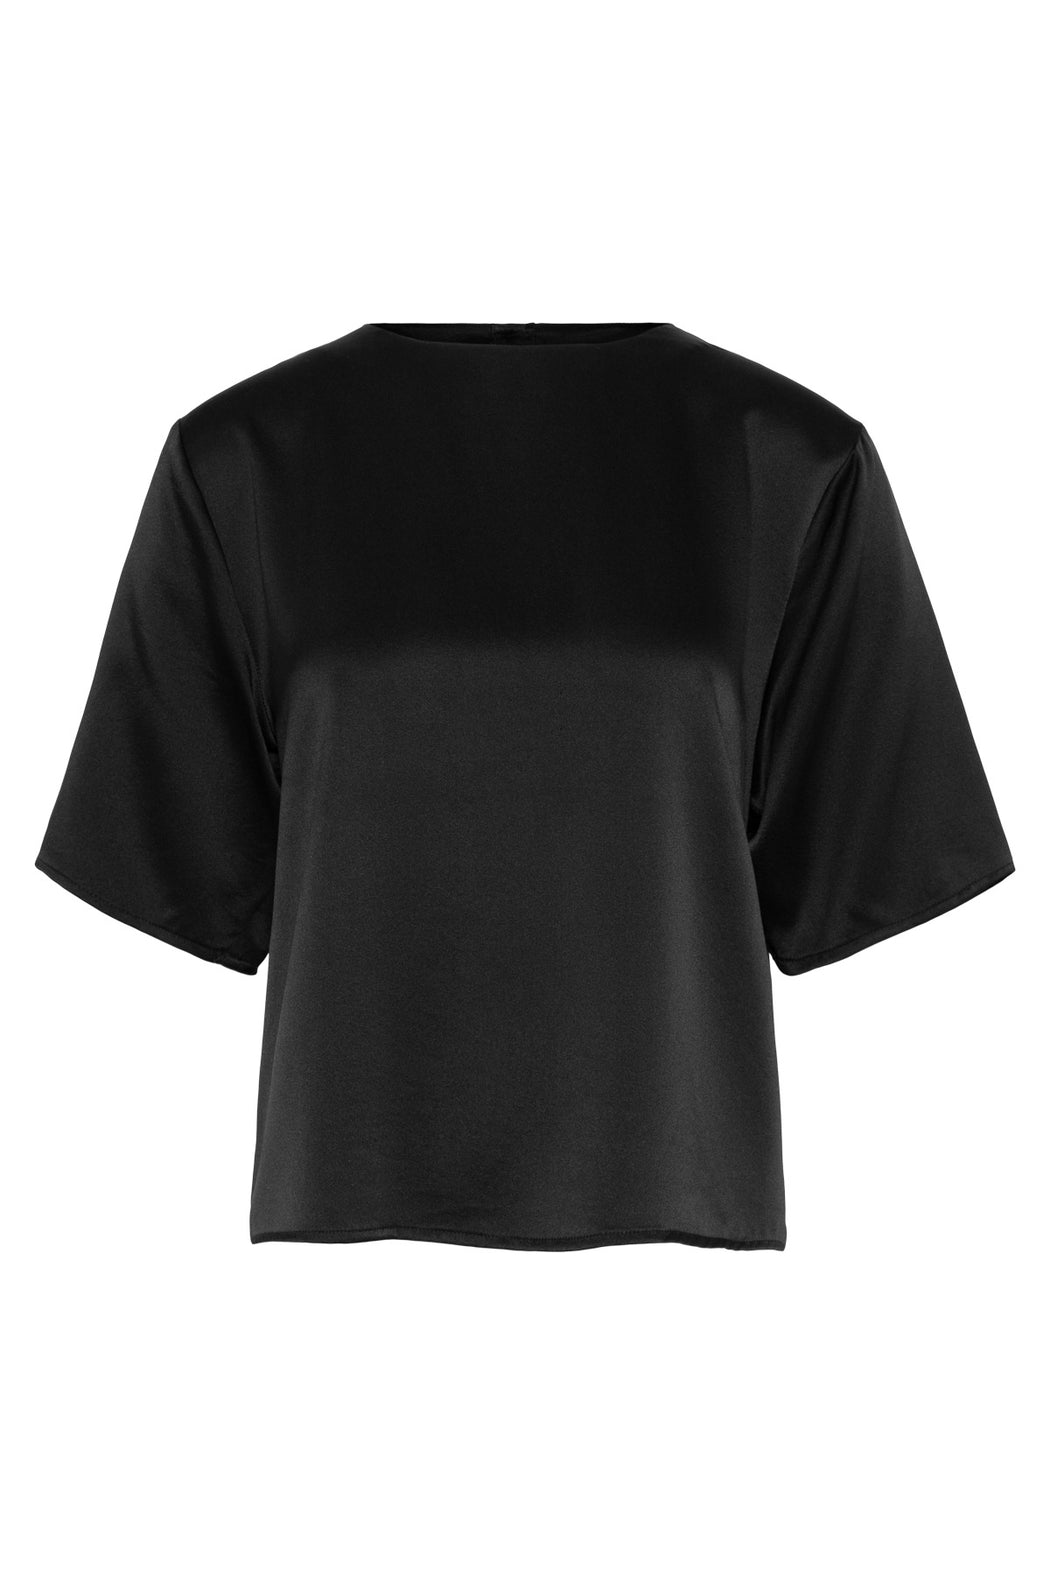 Envelope1976 Evolve T-shirt - Silk T-shirt Black